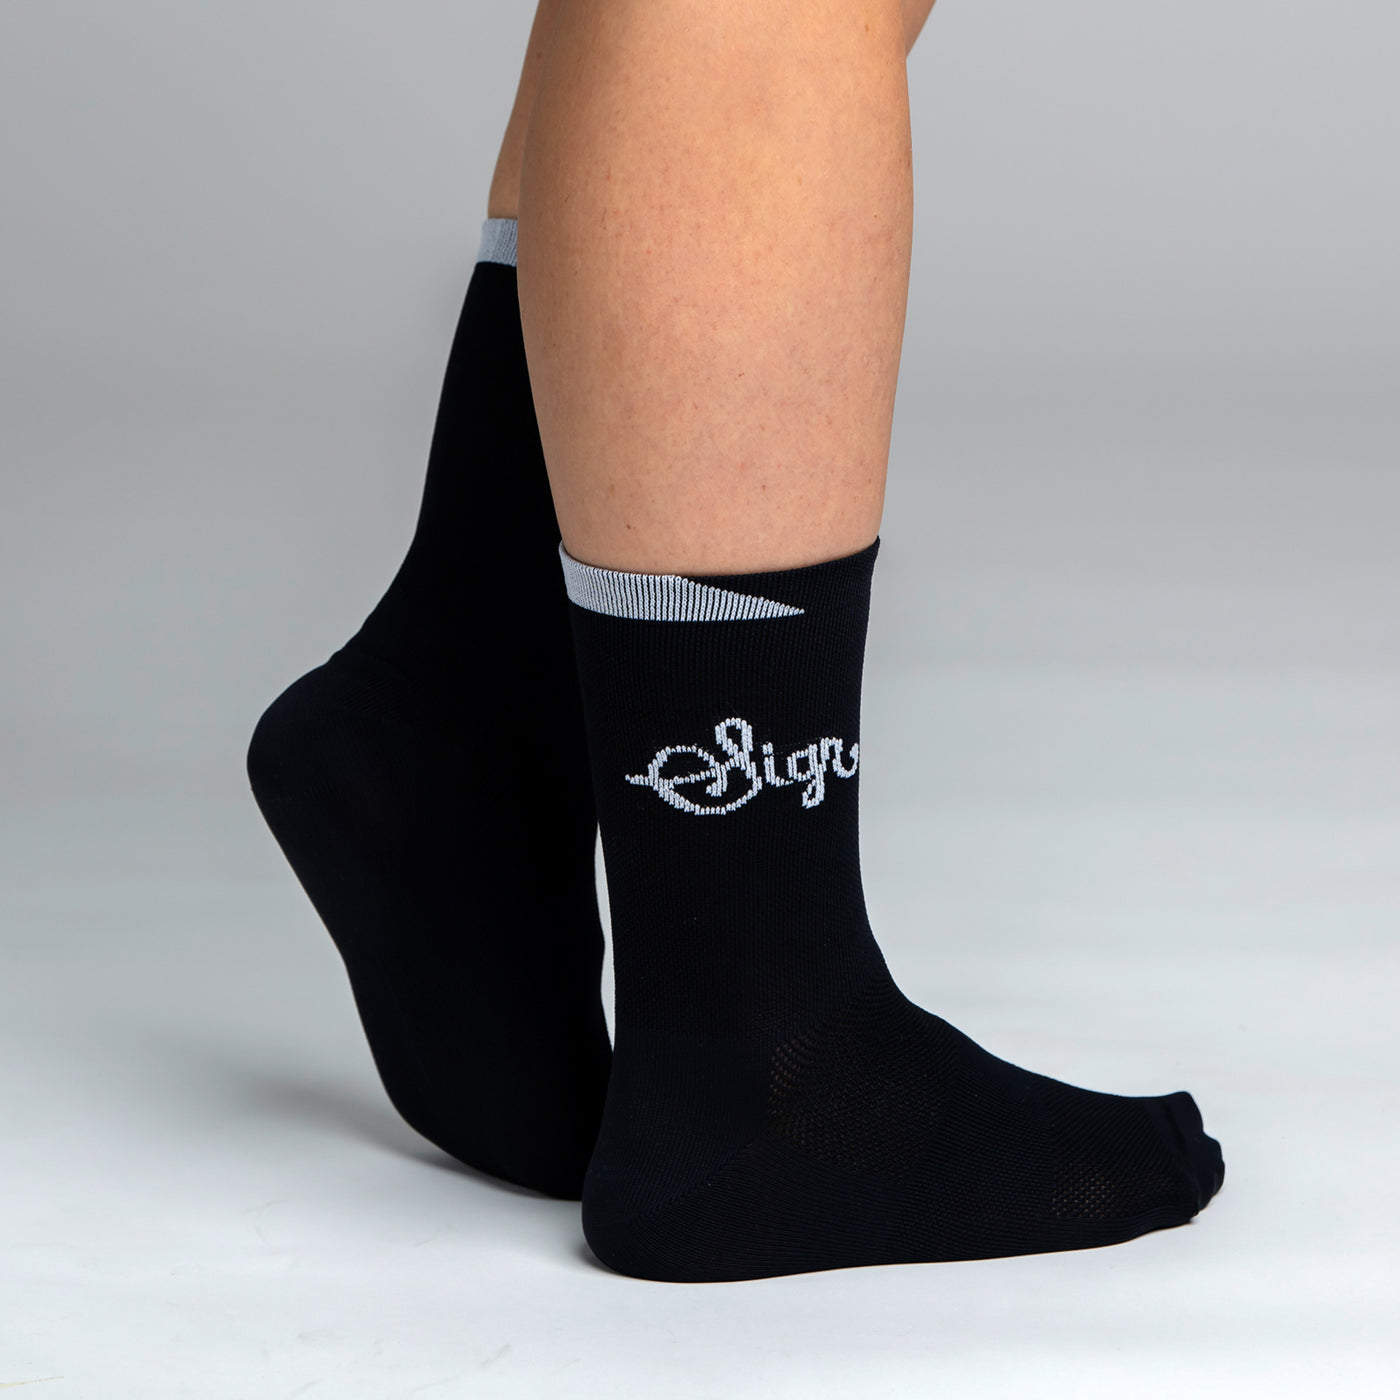 Snok - Black Cycling Socks for Women - Pack of 2 pairs